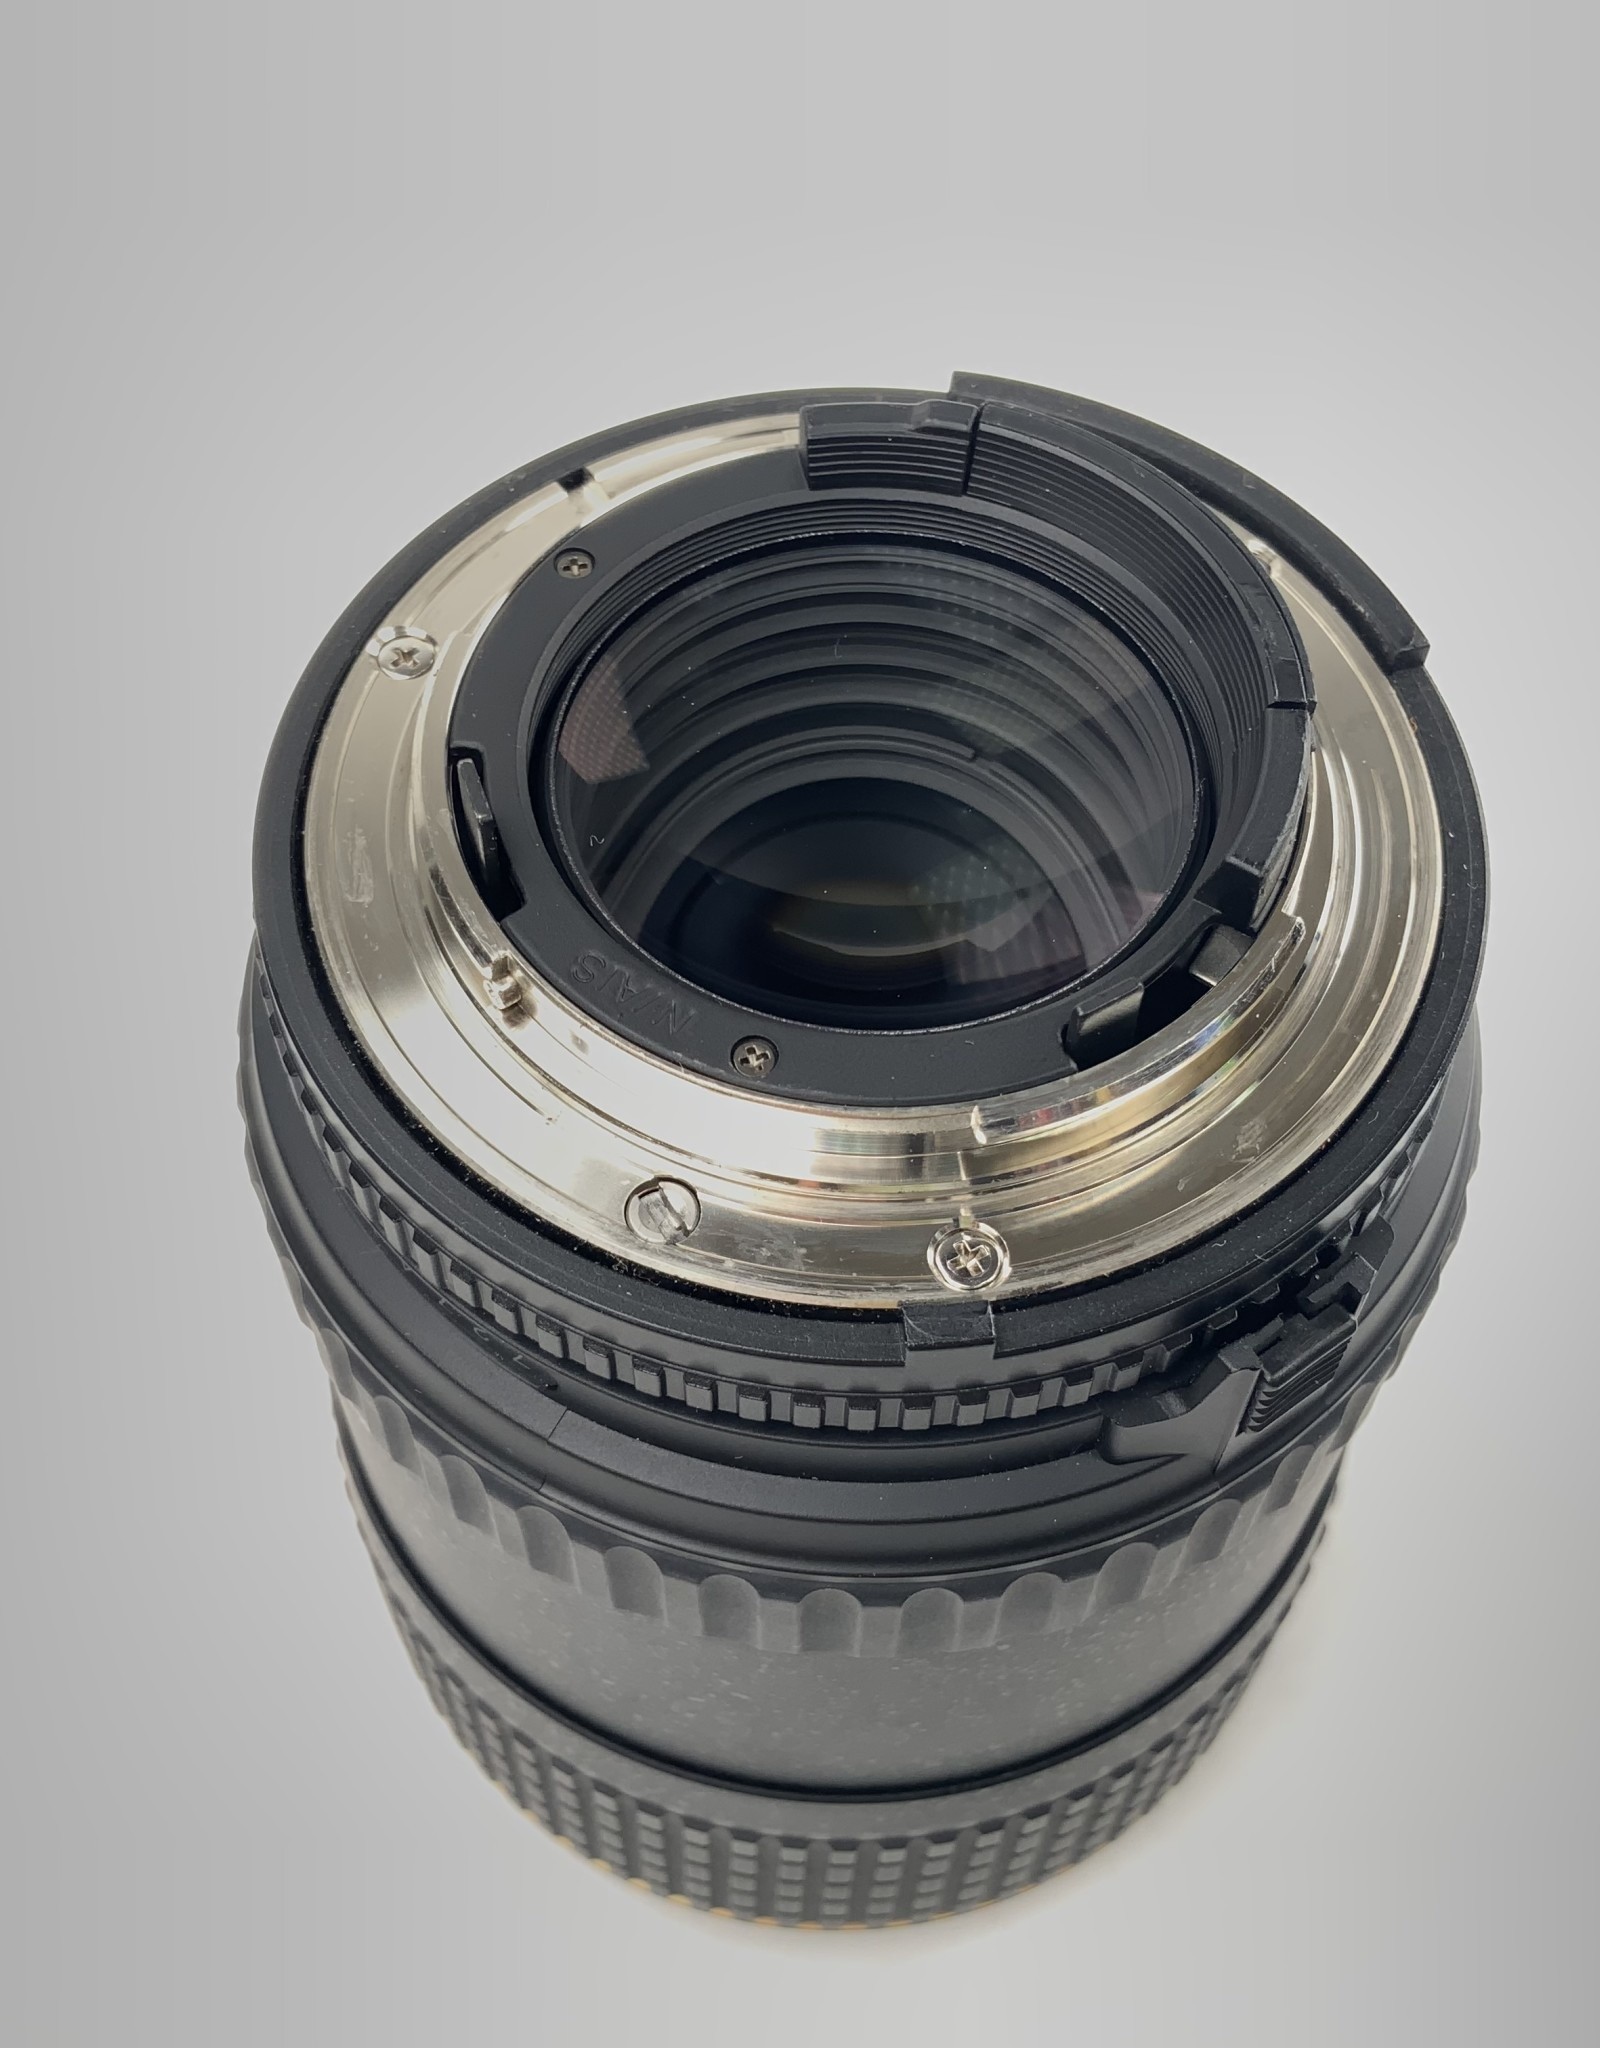 Tokina Tokina AT-X Pro 100mm f2.8 D Lens for Nikon Used EX